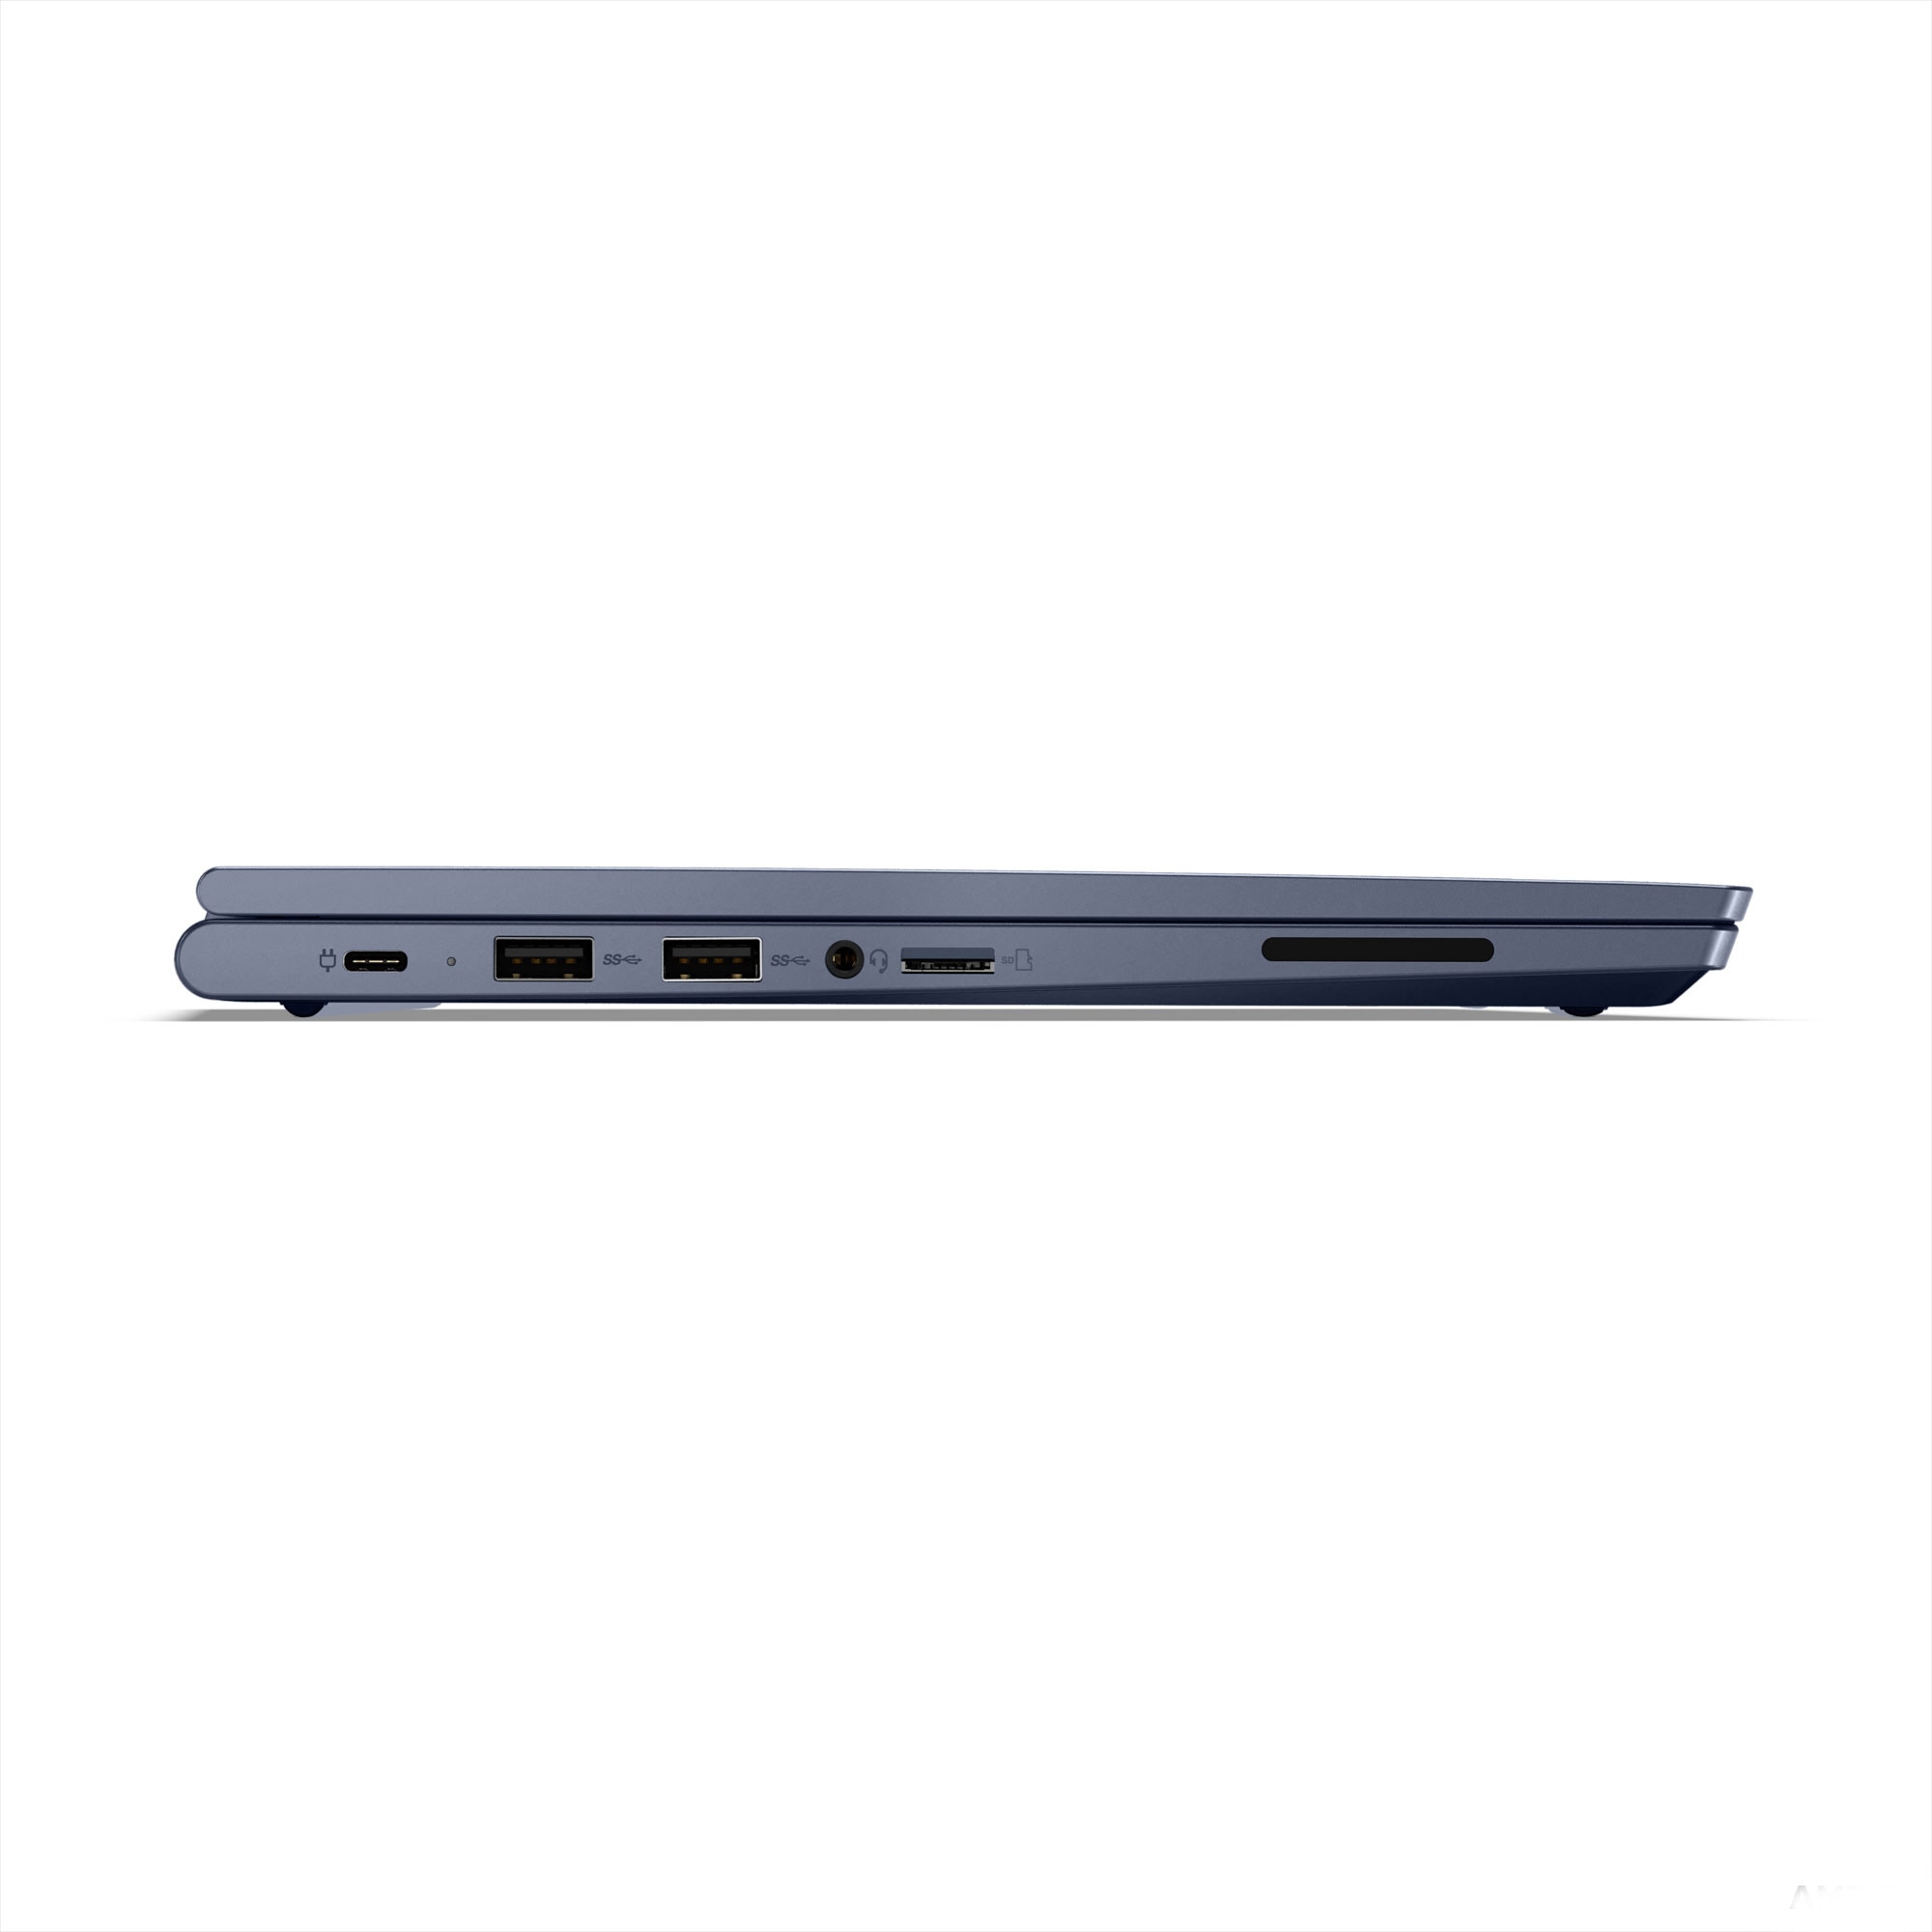 Lenovo ThinkPad C13 Yoga Chromebook 13.3" FHD 2-in-1s Touchscreen Laptop, AMD Athlon Gold 3150C, 4GB RAM, 32GB HD, Chrome OS, Blue, 20UX001PUS - image 5 of 7